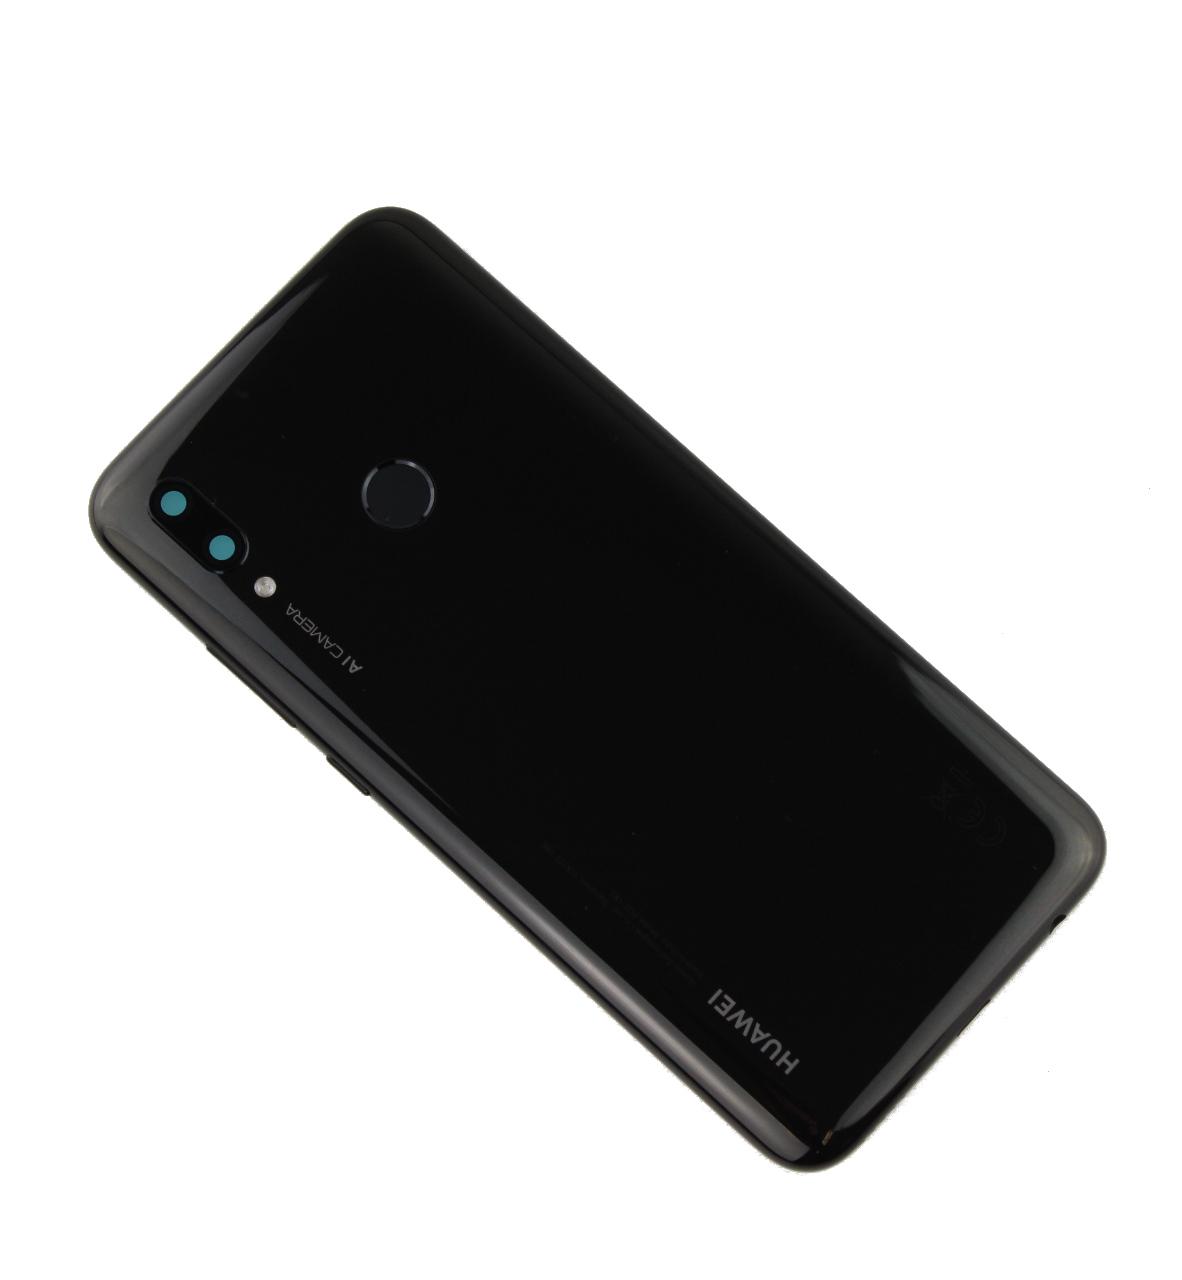 Originál kryt baterie Huawei P Smart 2019 černý